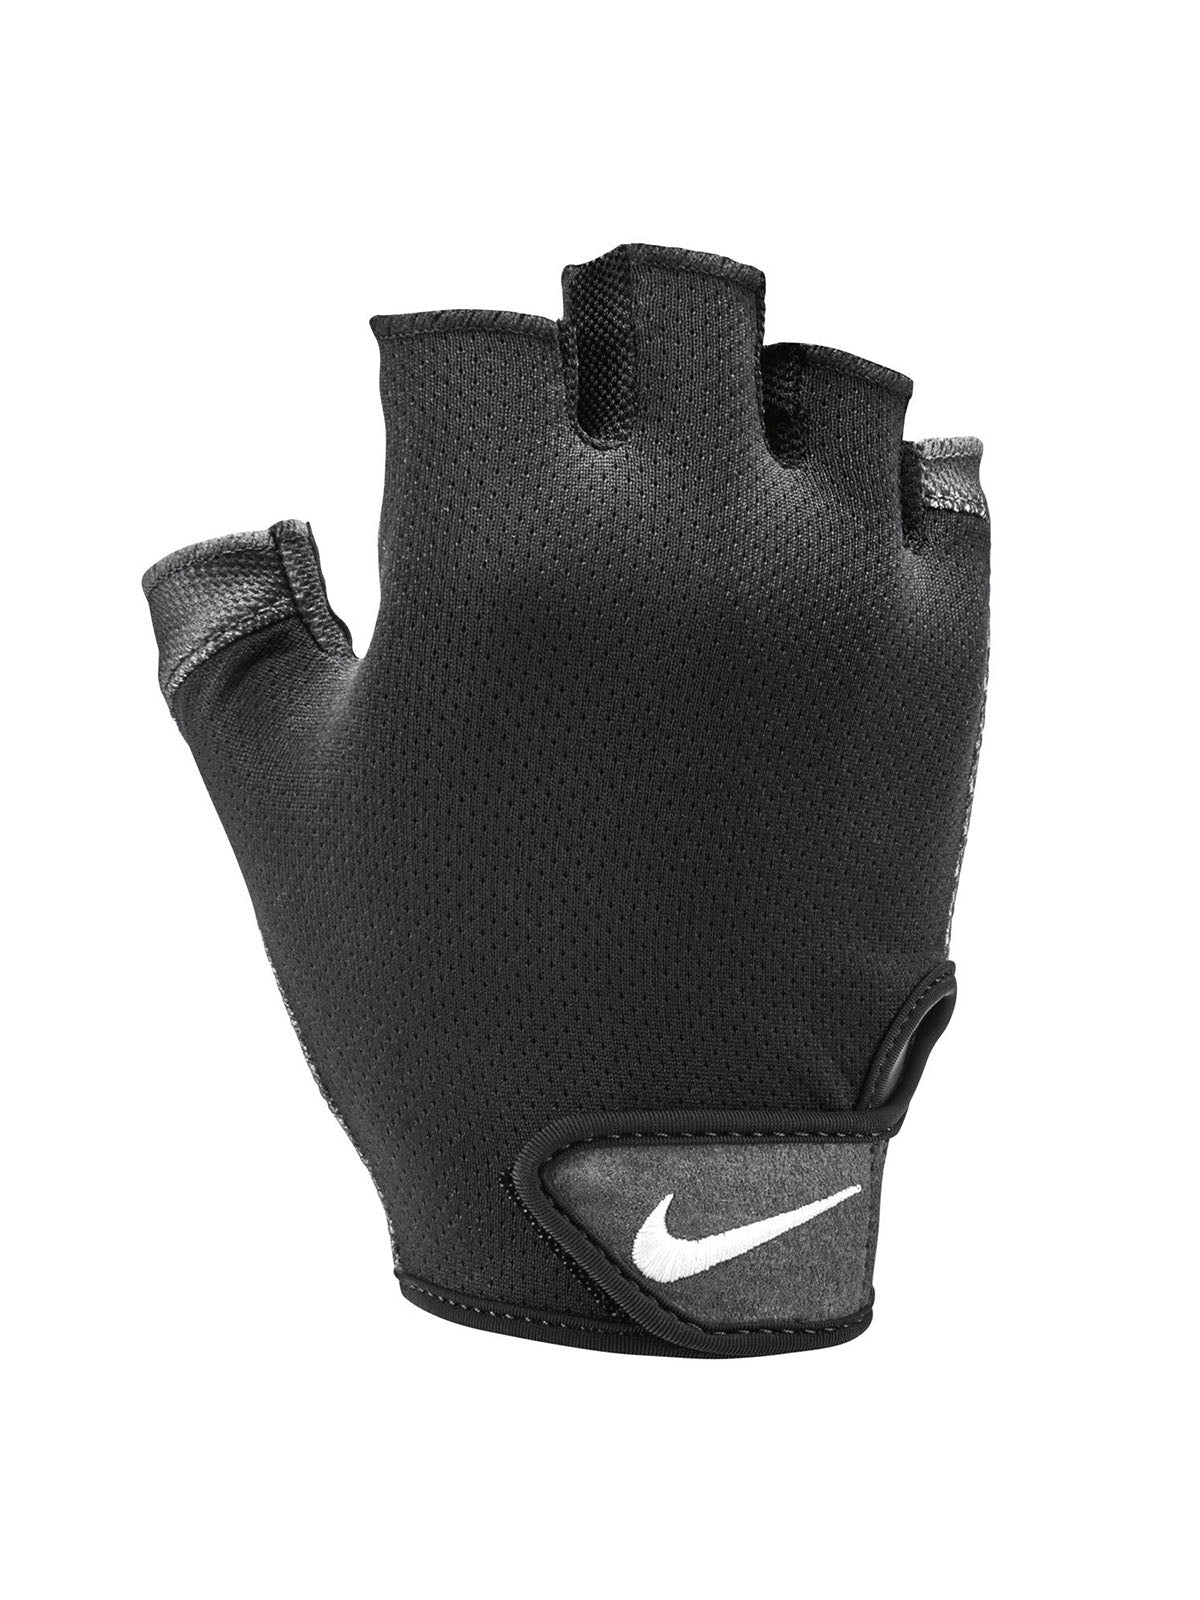 Gloves and Mittens Unisex Nike - Nike Essential Lightweight Training Gloves - Black